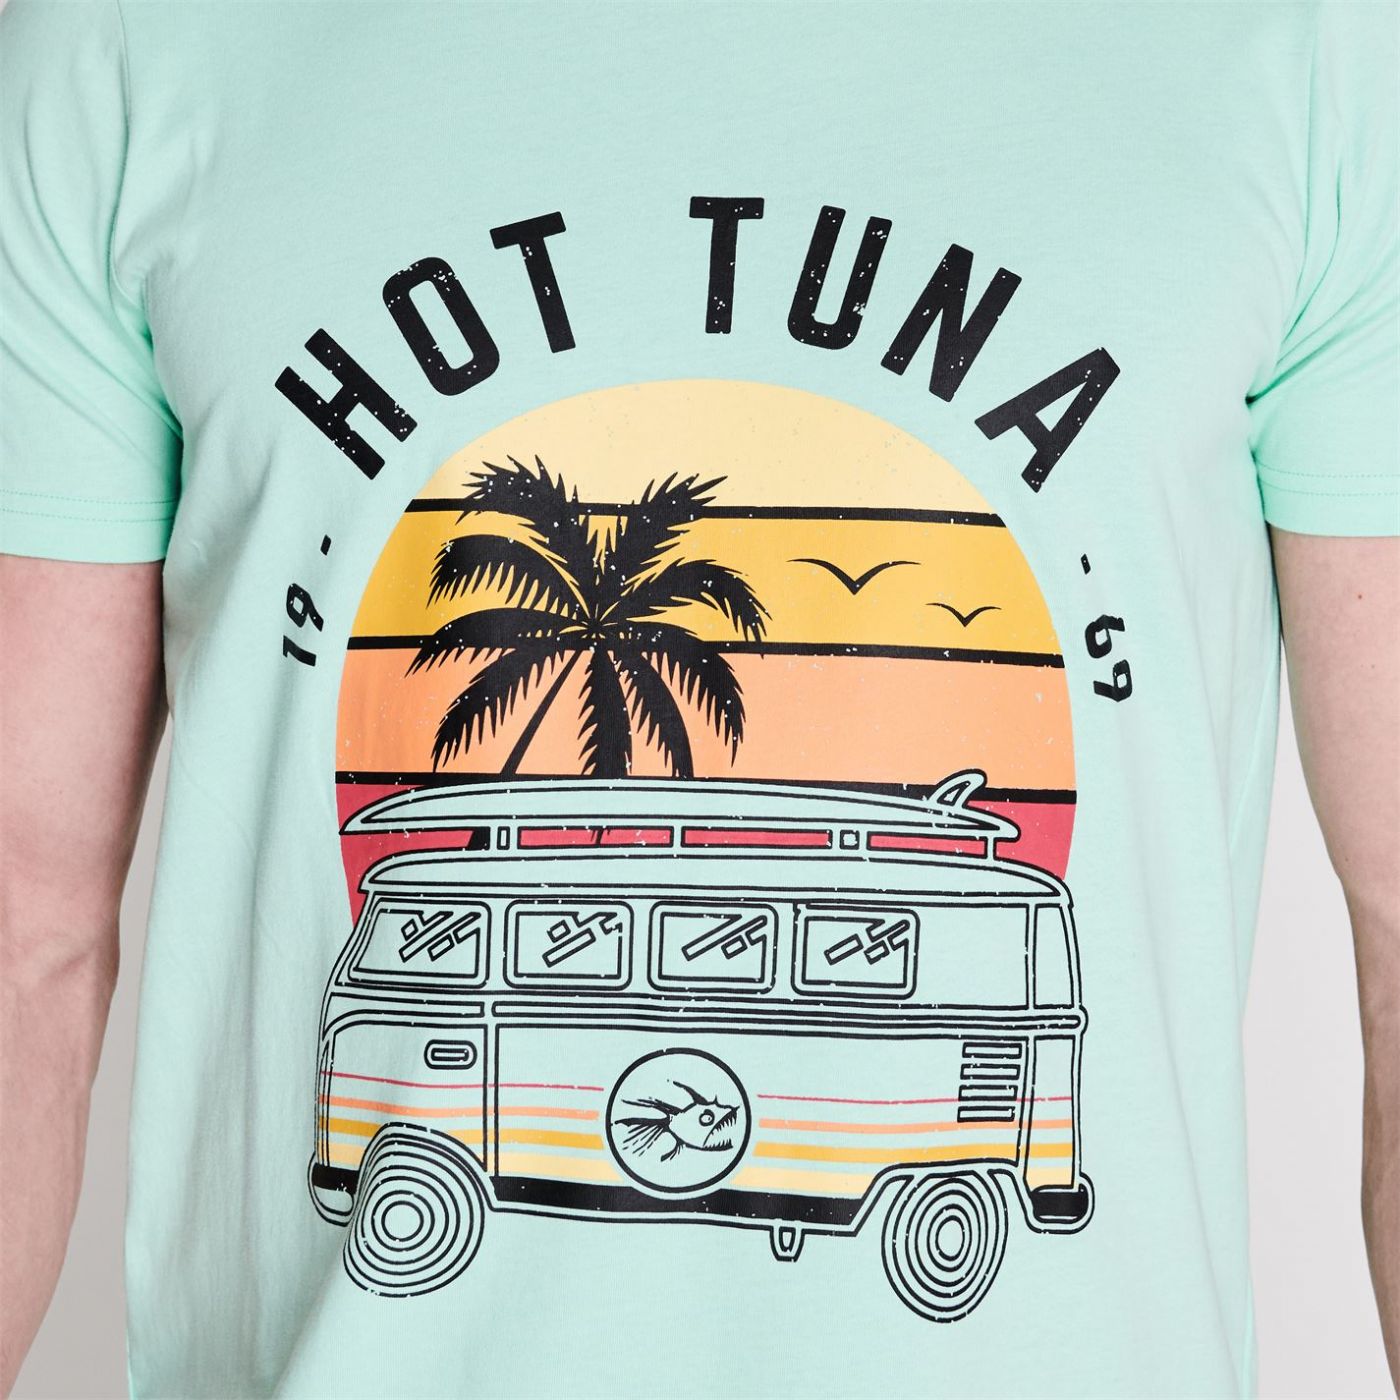 Men's t-shirt Hot Tuna Crew T Shirt.